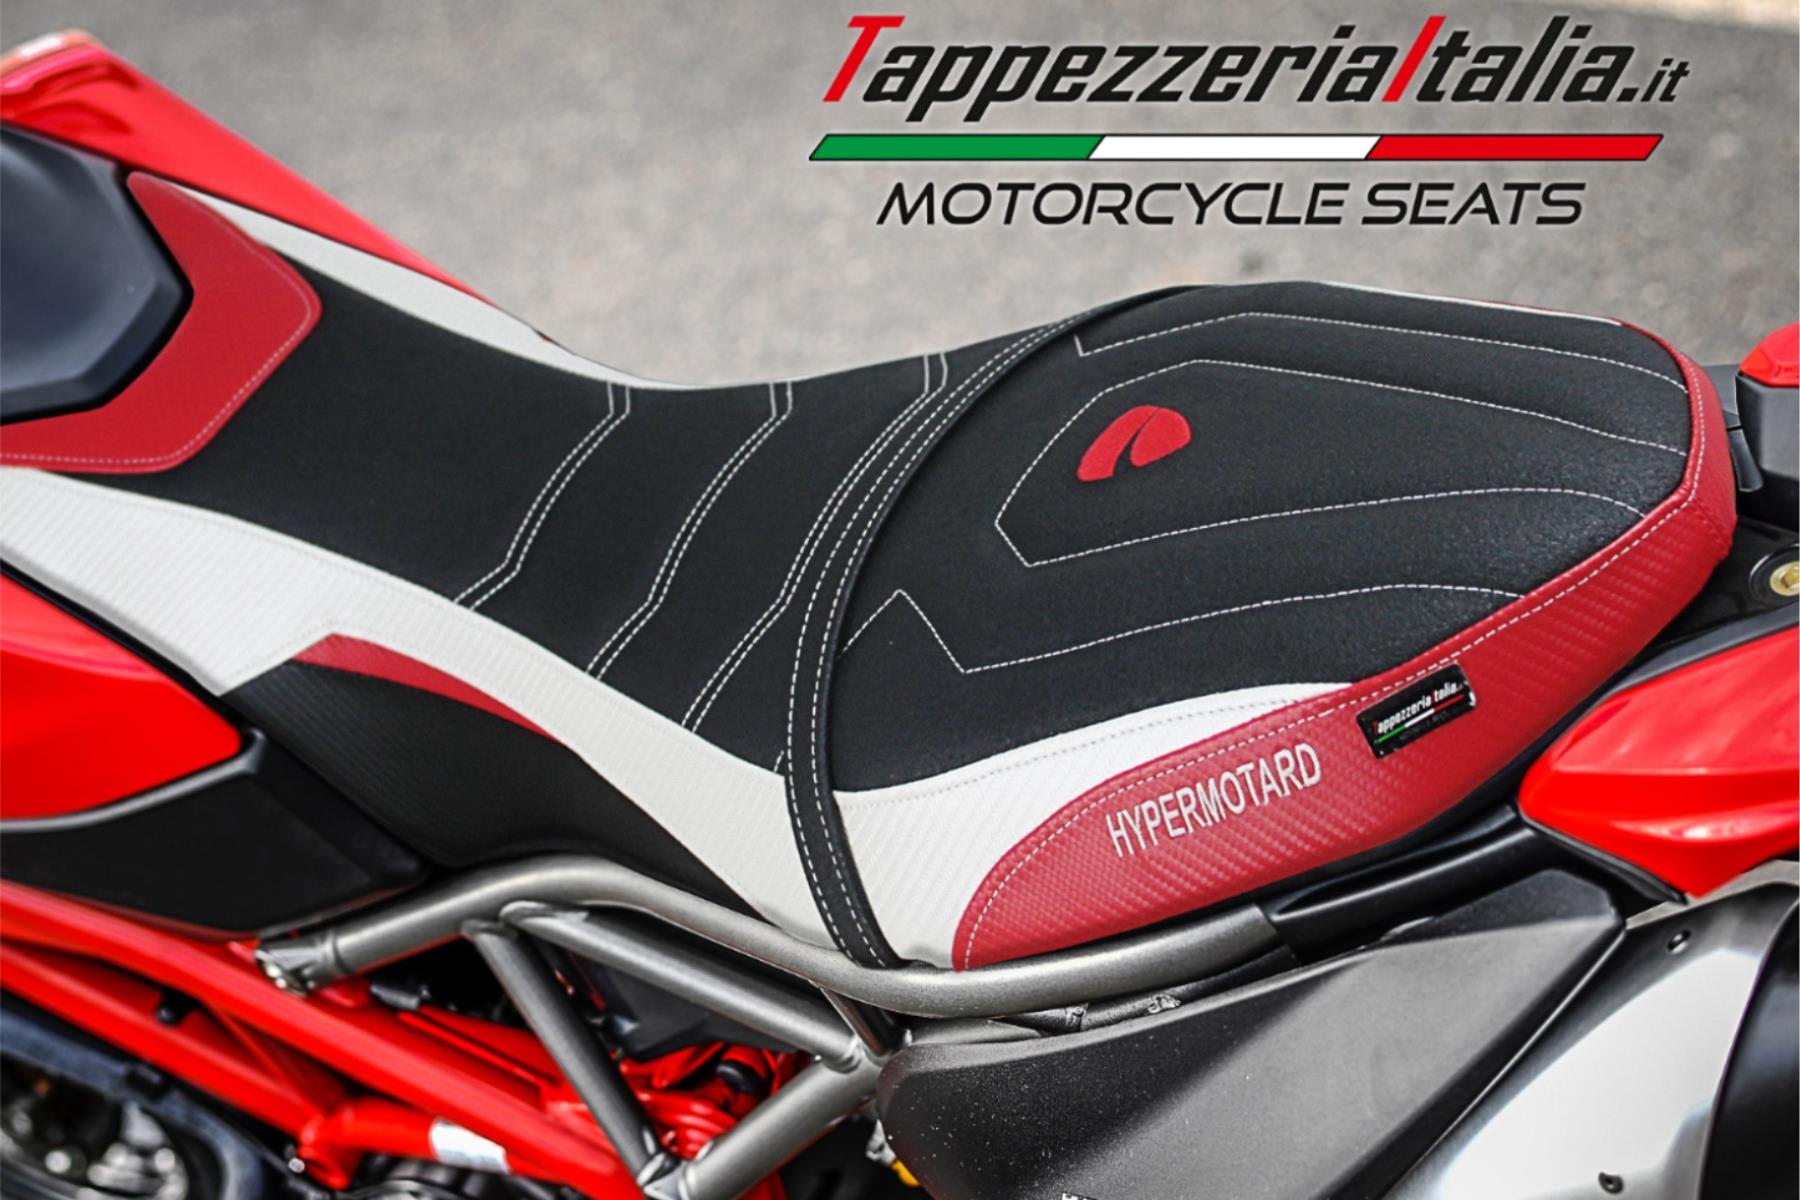 Ducati Hypermotard 950 2019-2021 Tappezzeria Italia Seat Cover